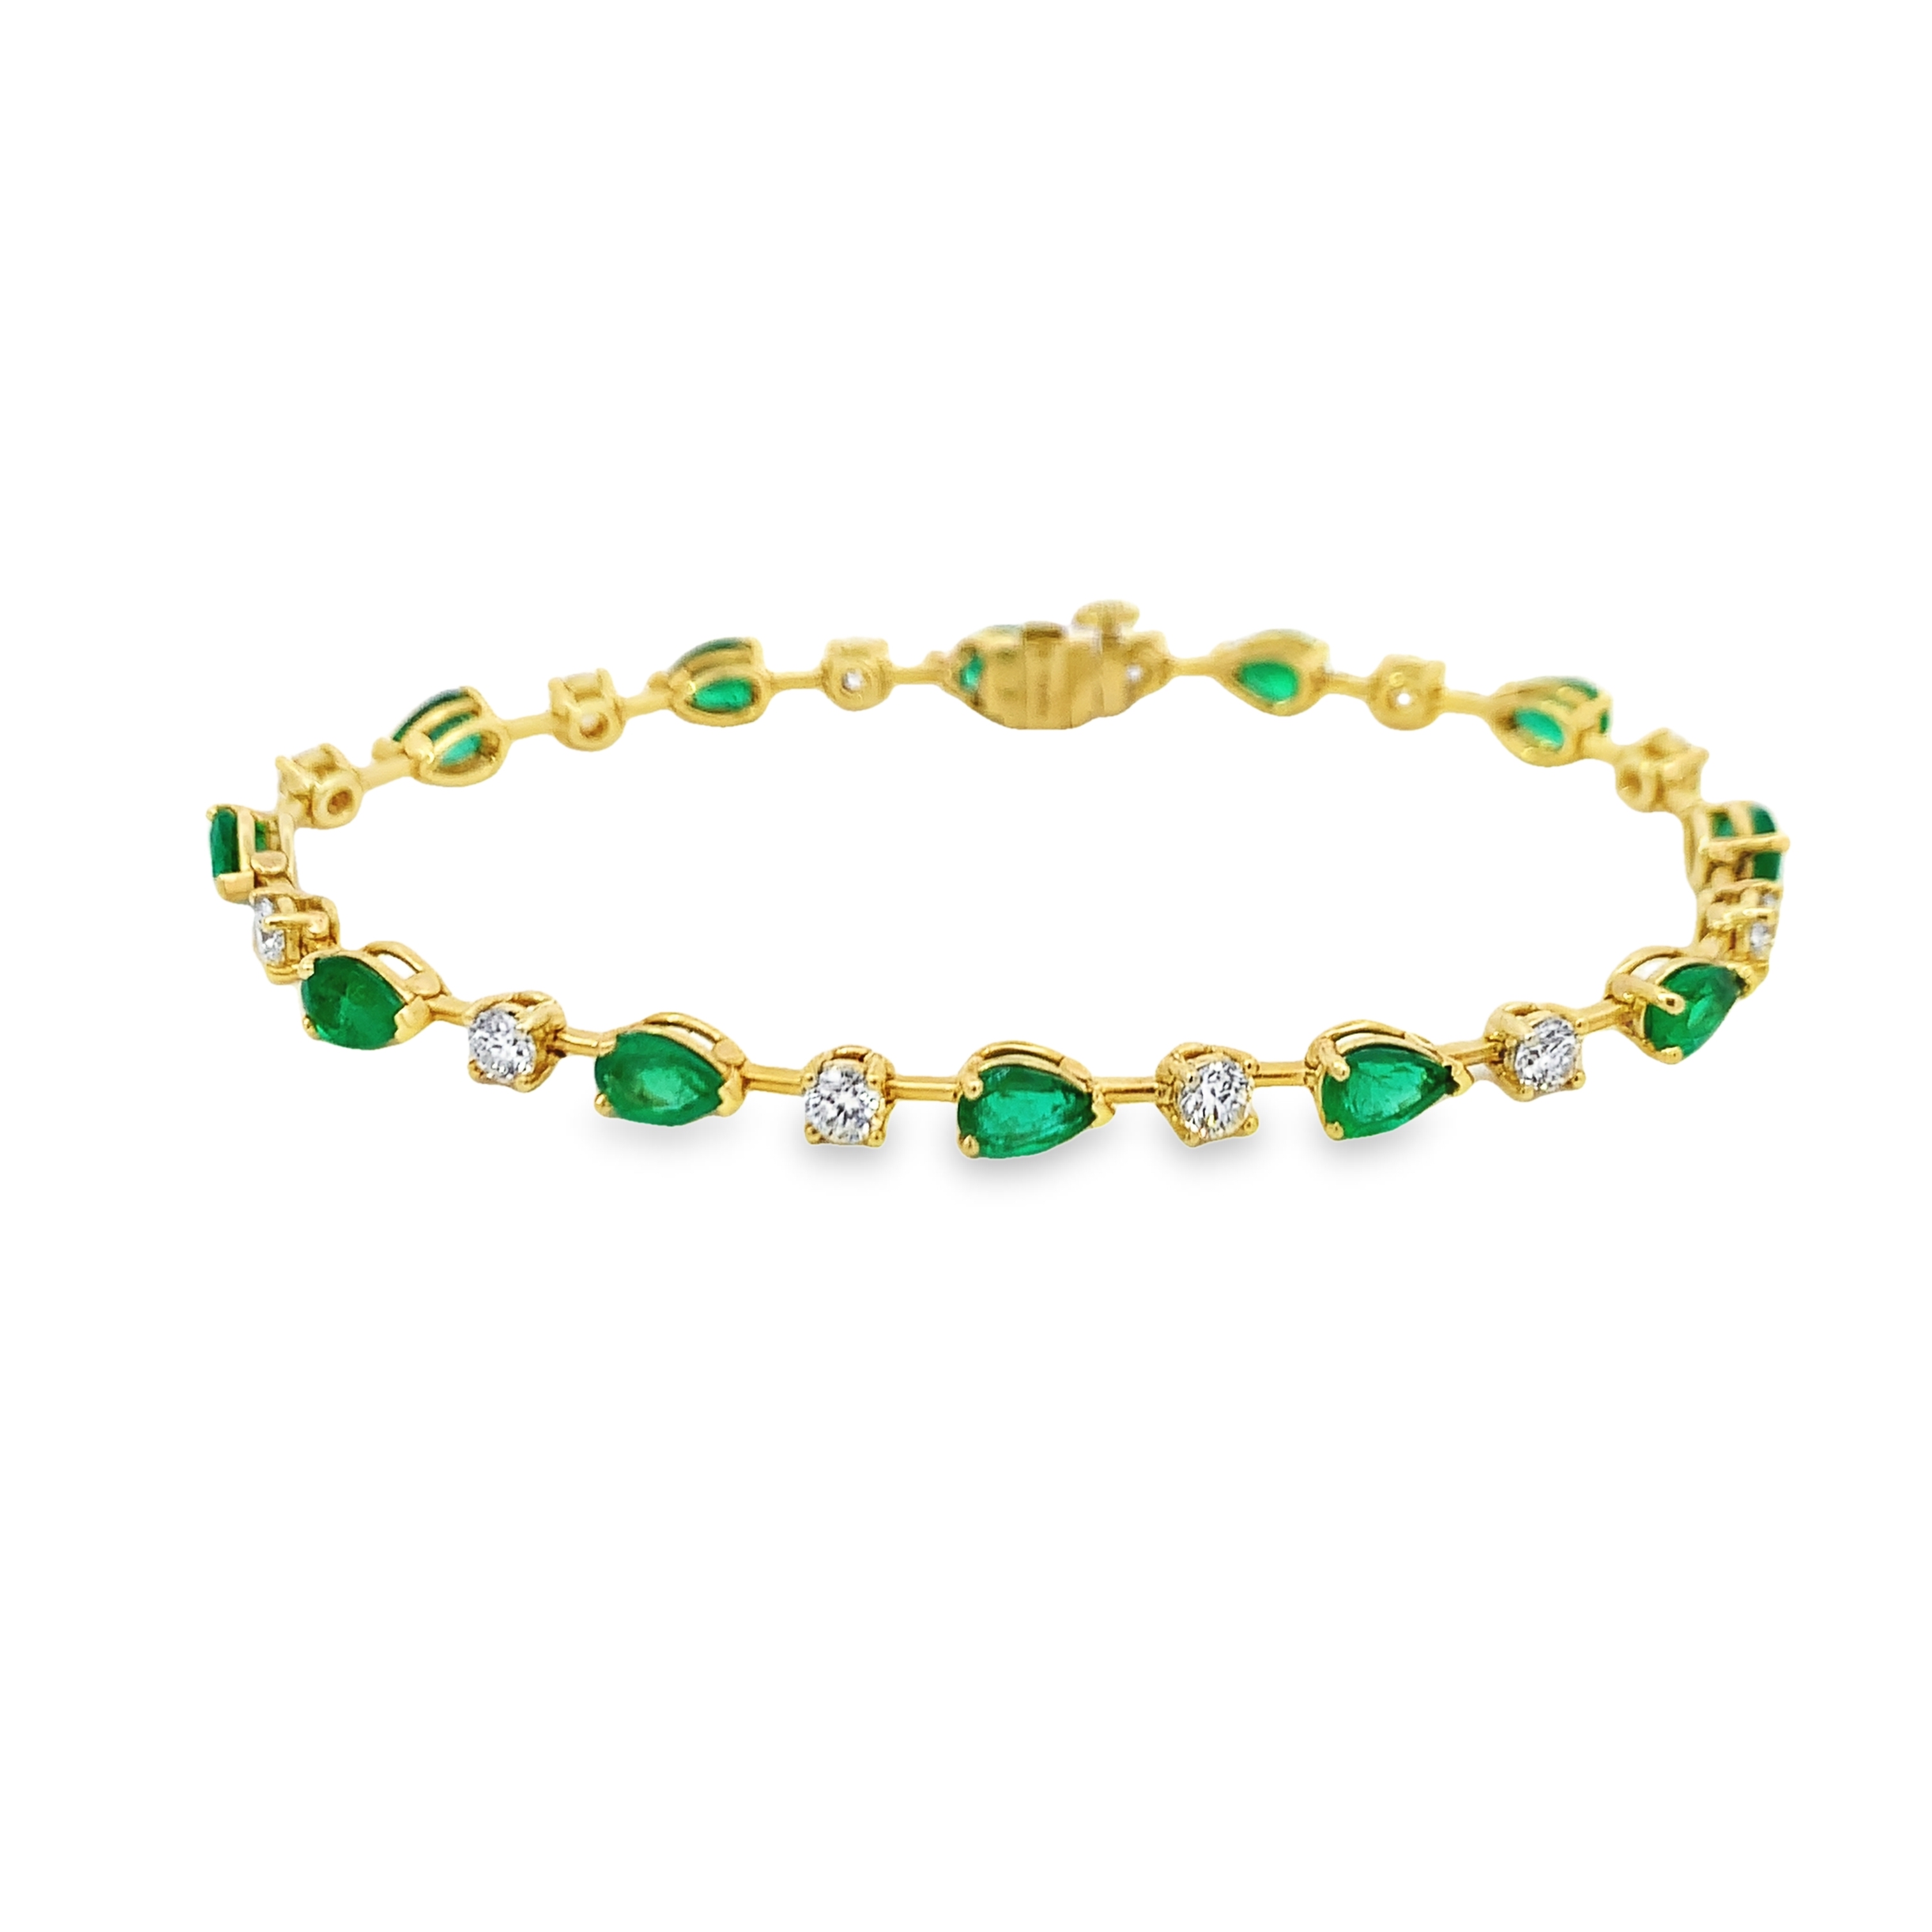 Norman Silverman 18K Yellow Gold Emerald and Diamond Bracelet